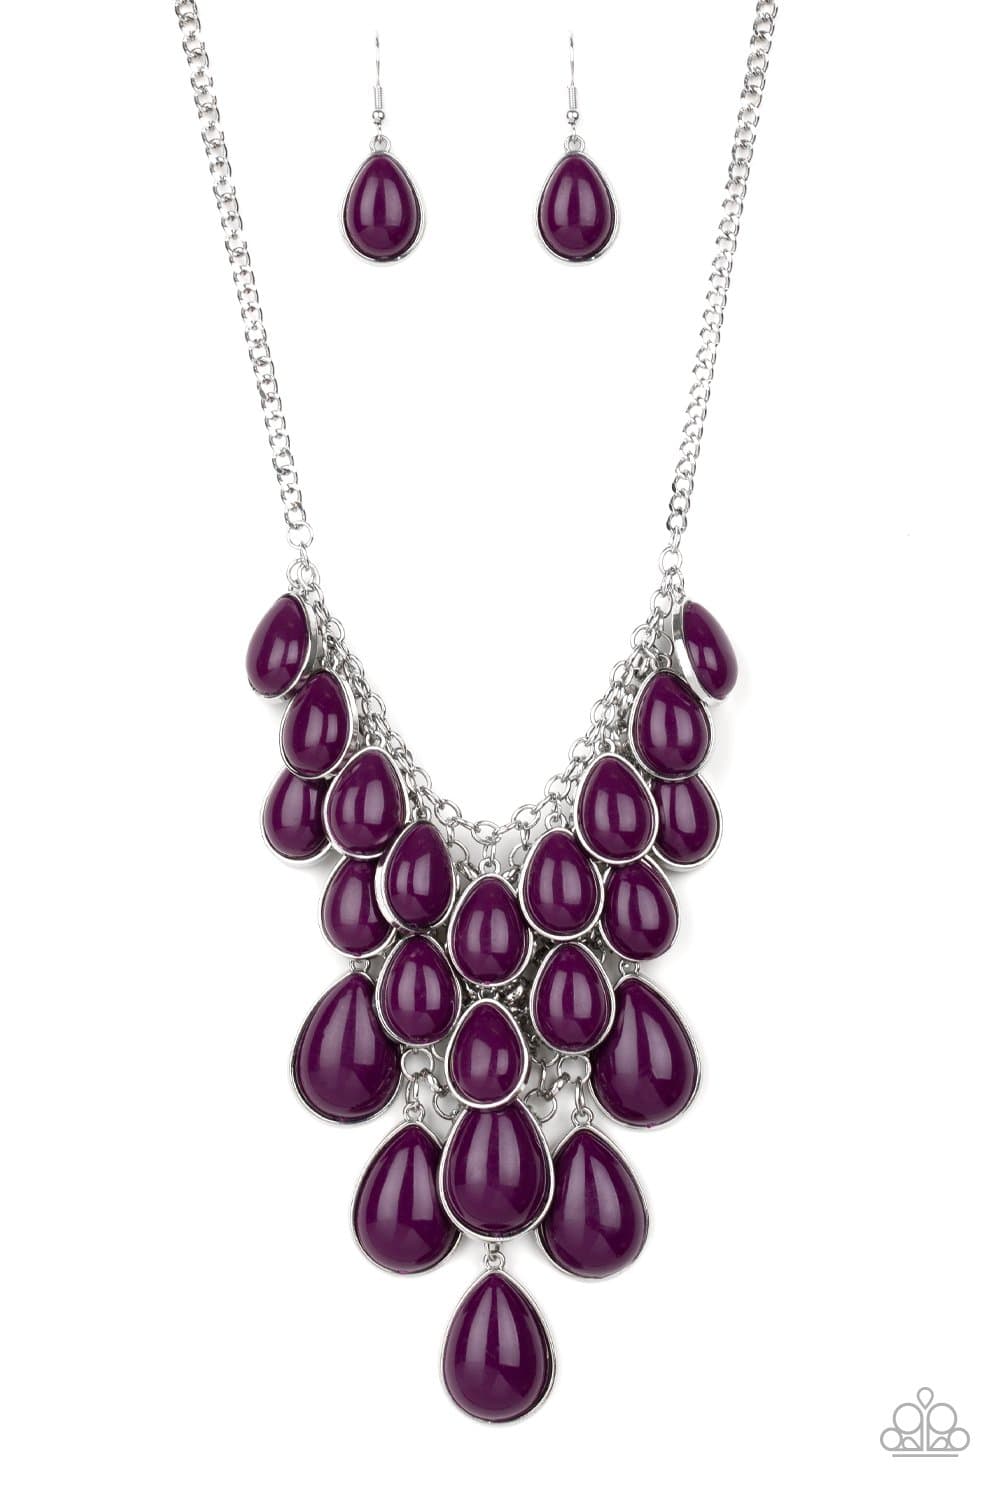 Shop Til You TEARDROP - Plum Purple Necklace - Paparazzi Accessories - GlaMarous Titi Jewels